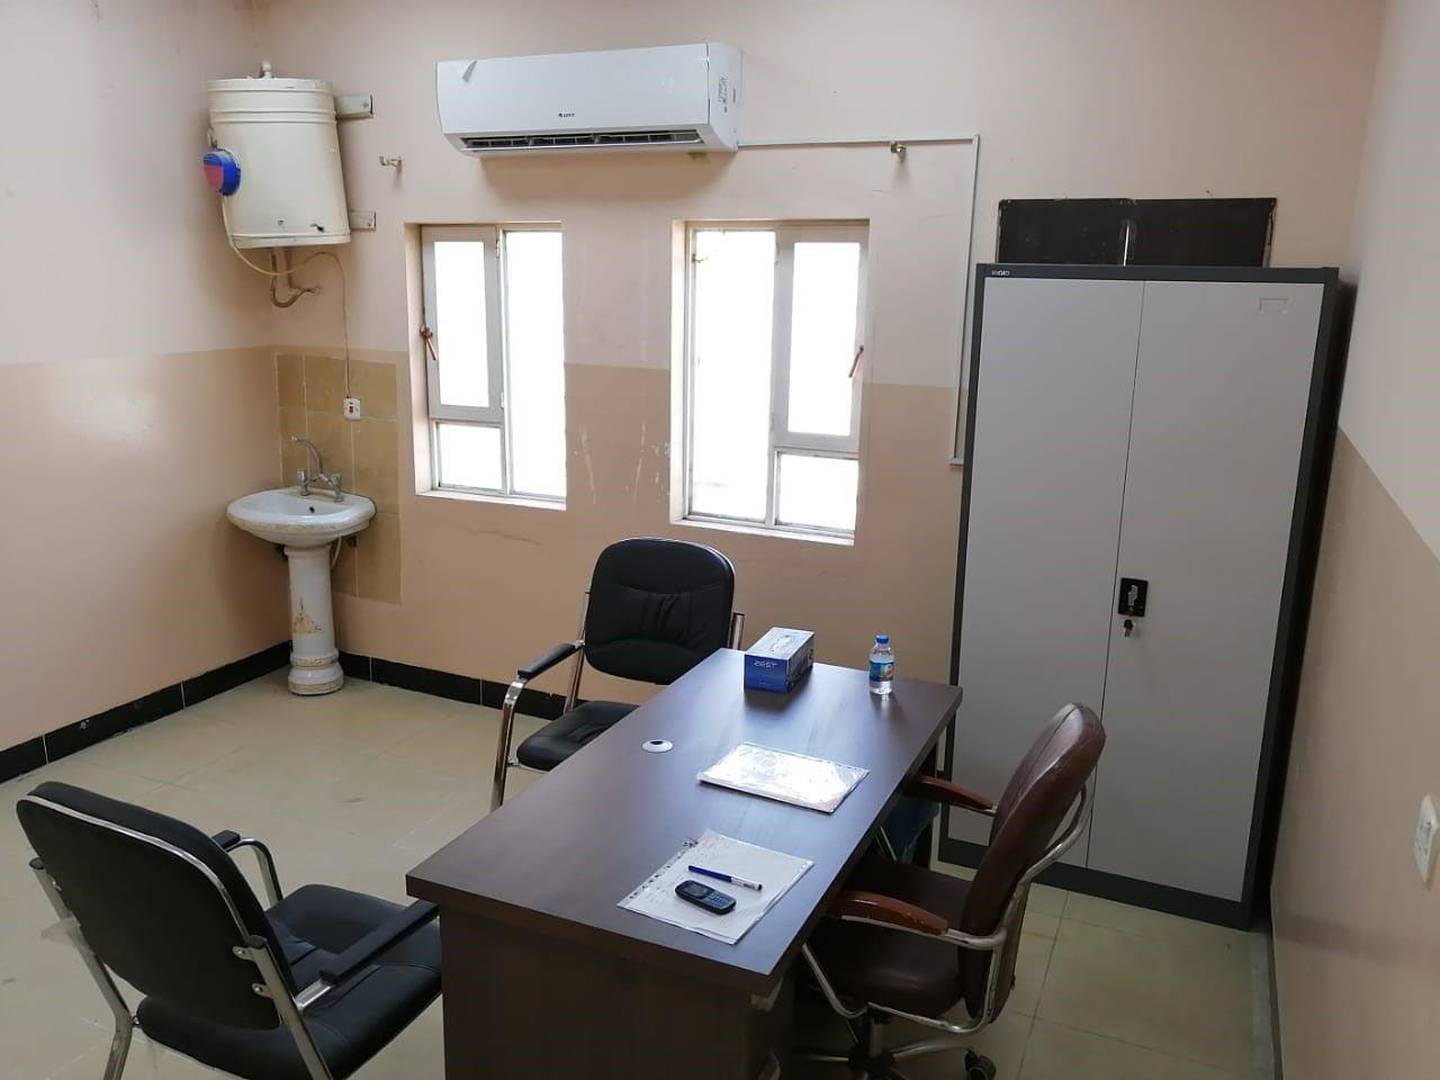 Mosul Al-Gharbi MHPSS consult room